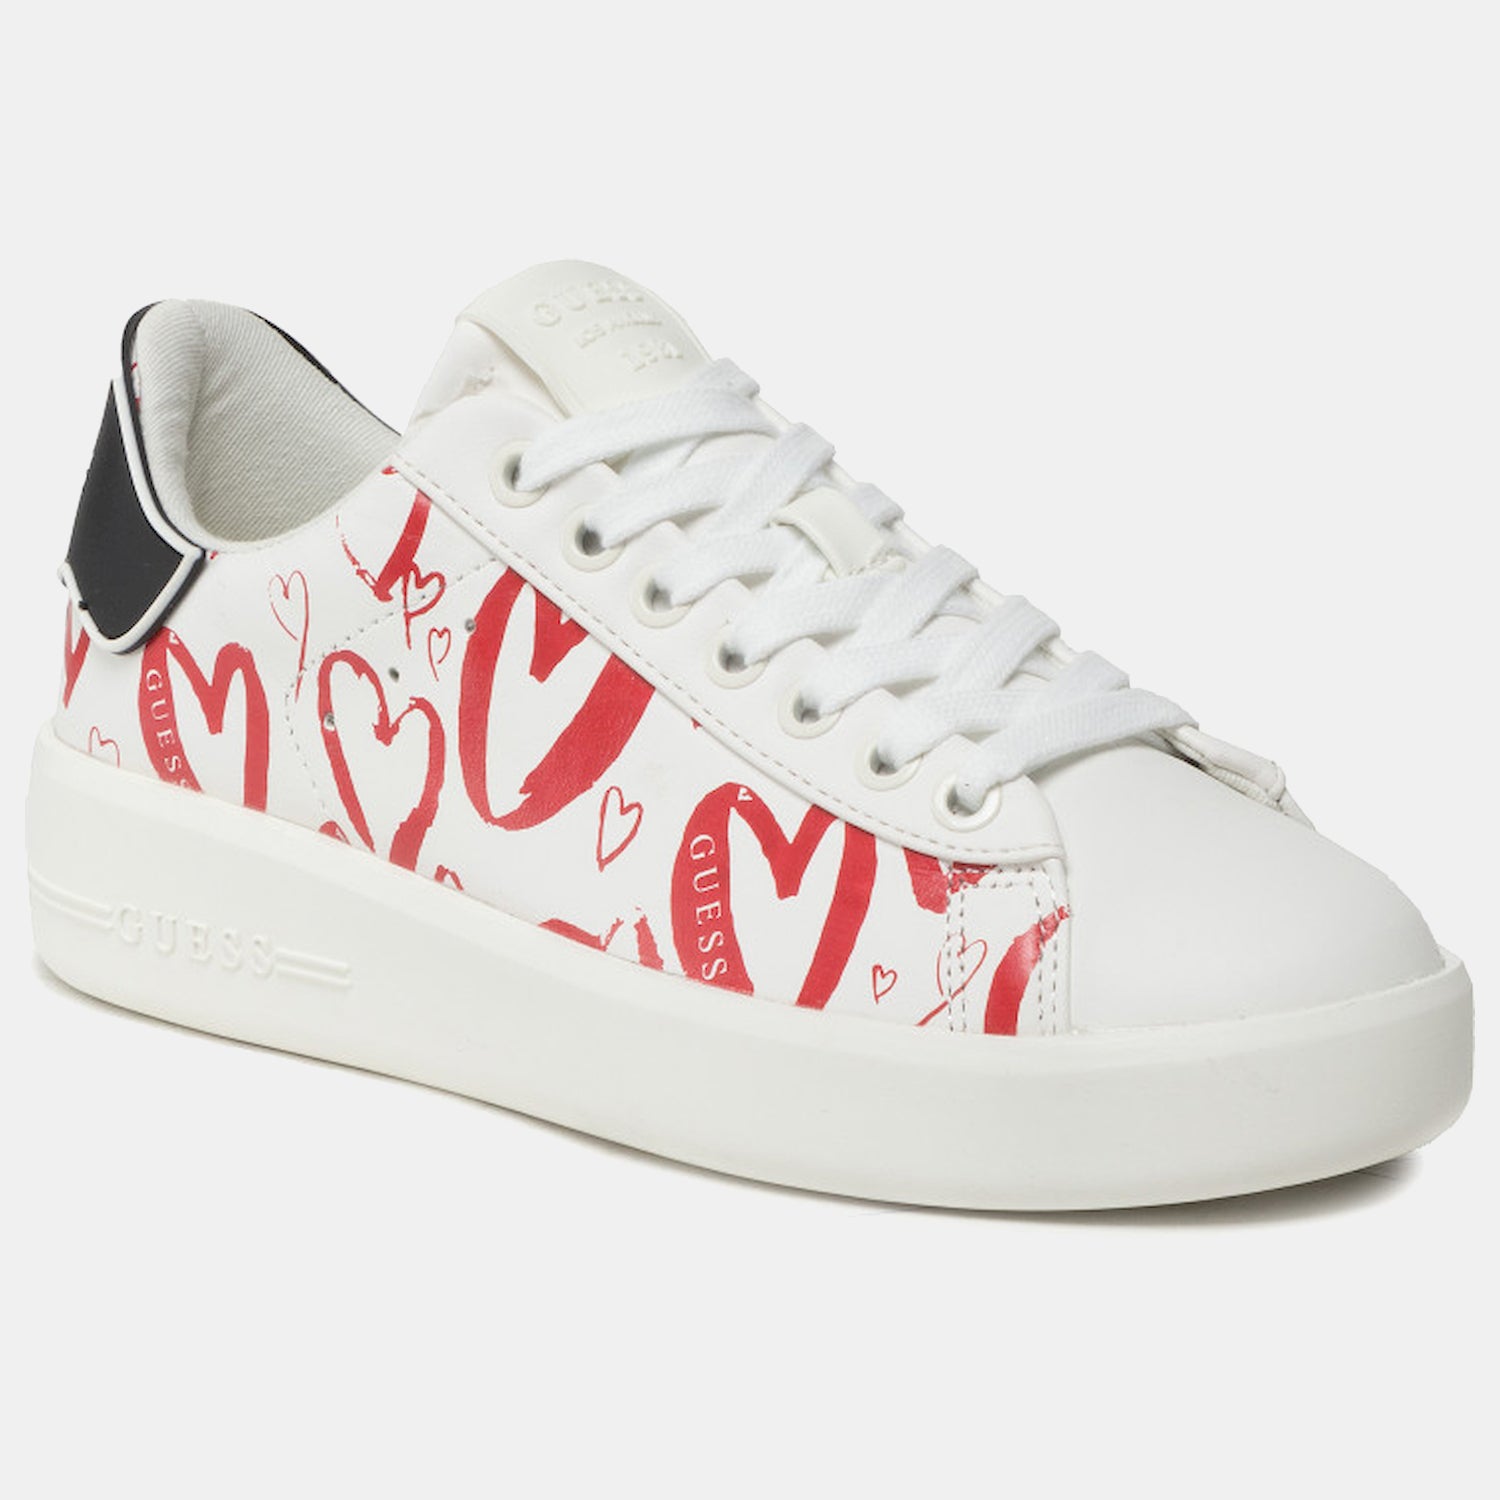 Guess Sapatilhas Sneakers Shoes Fl7rc7lep12 White Red Branco Vermelho_shot1